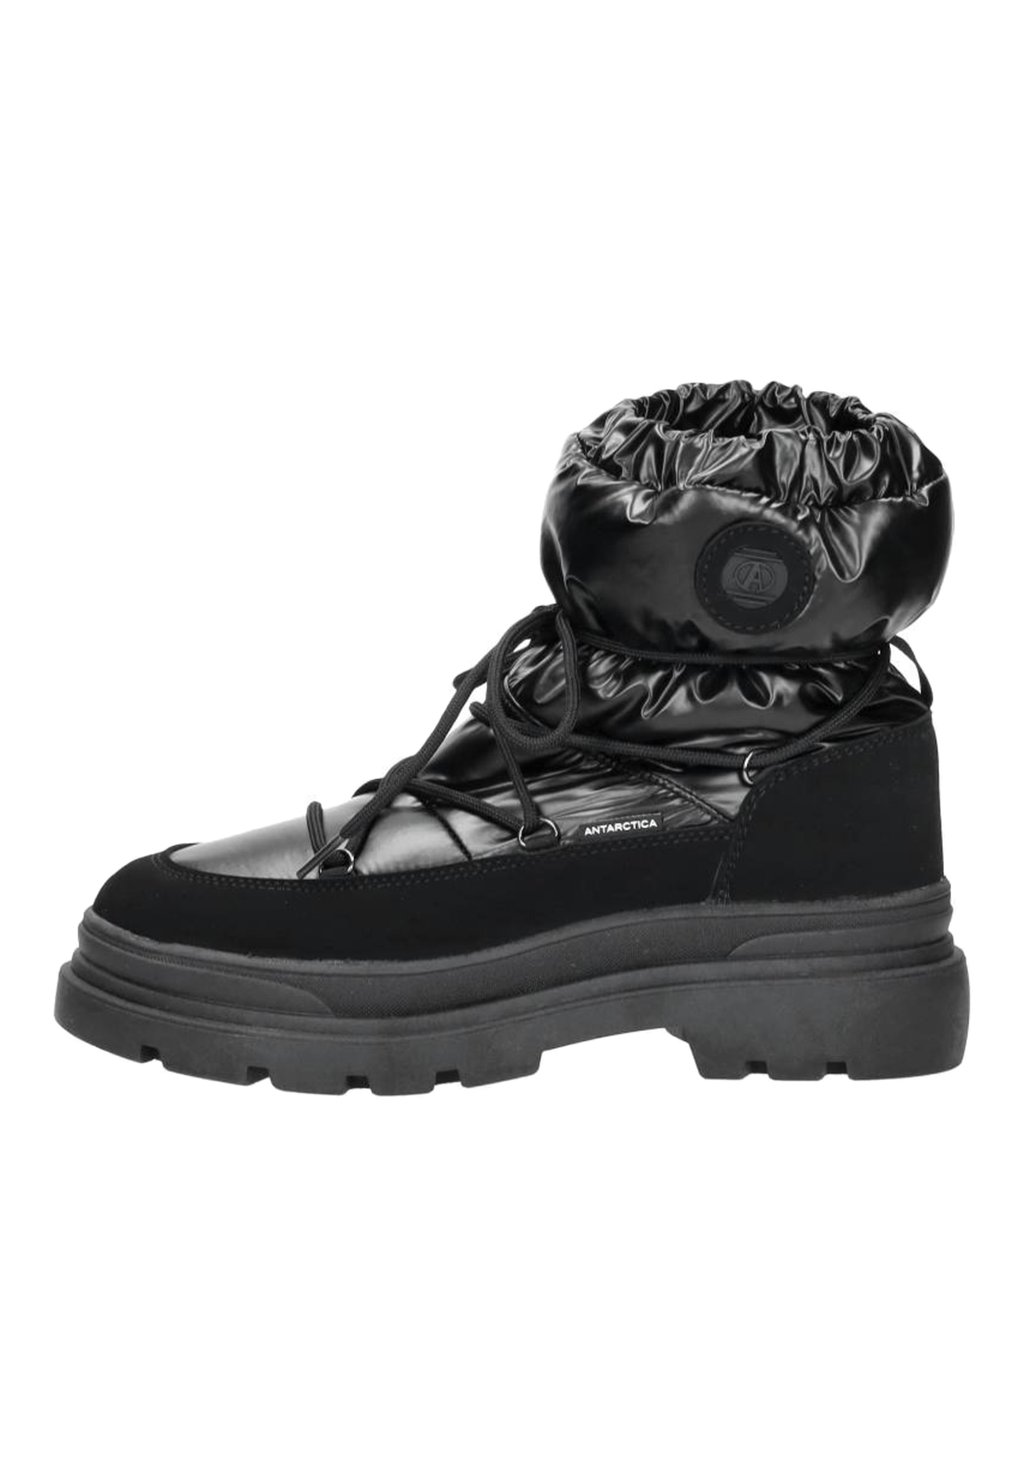 Зимние ботинки Antarctica Boots, цвет zwart keegan claire antarctica